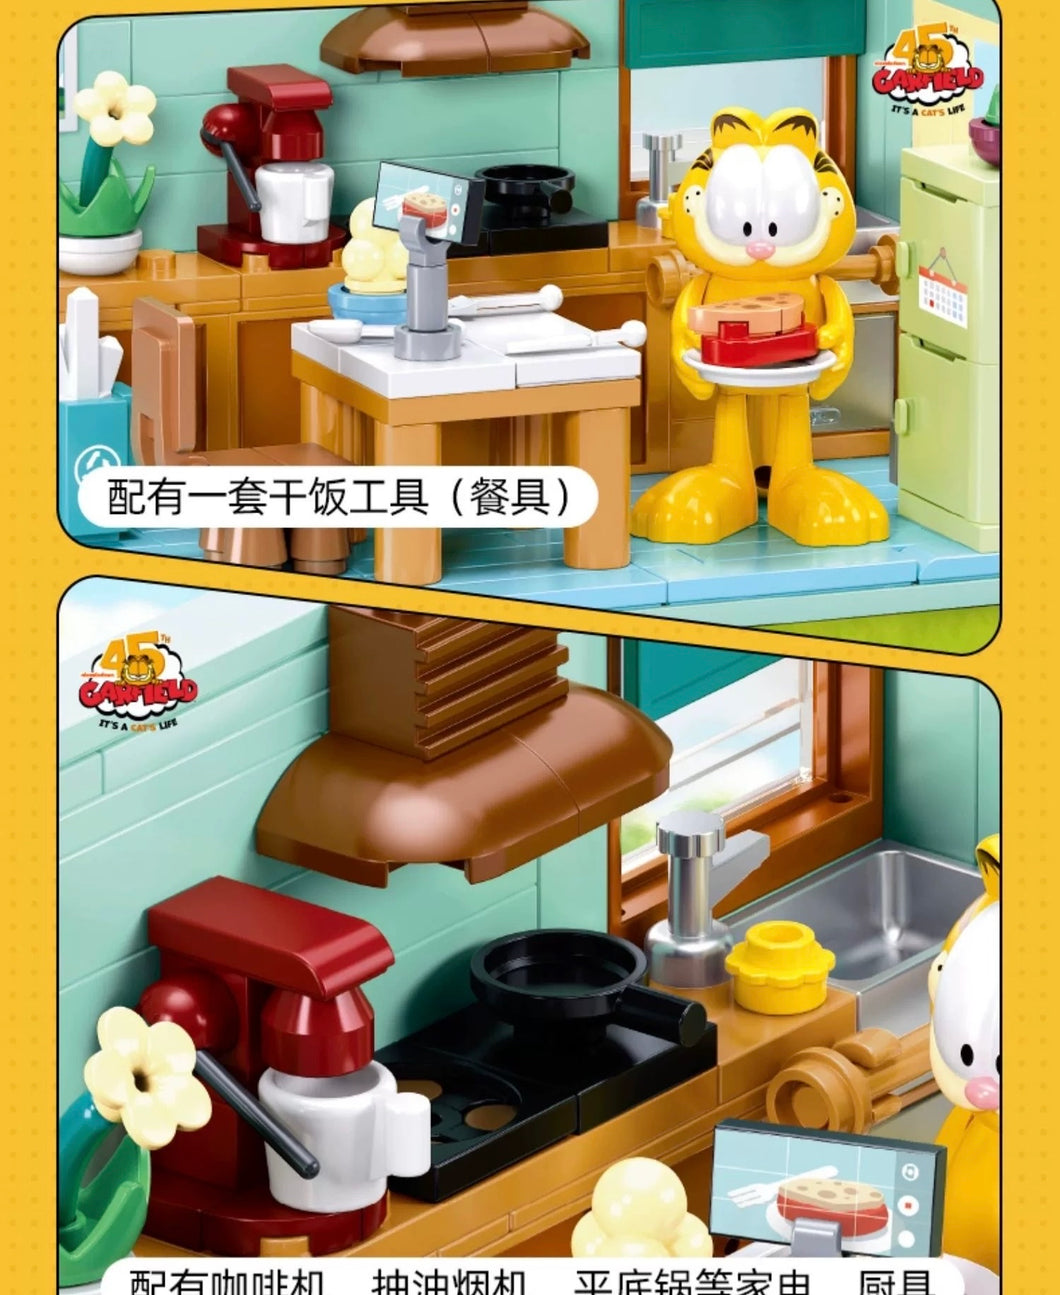 [Sluban] Garfield Home Diorama Sets | B1225-1226